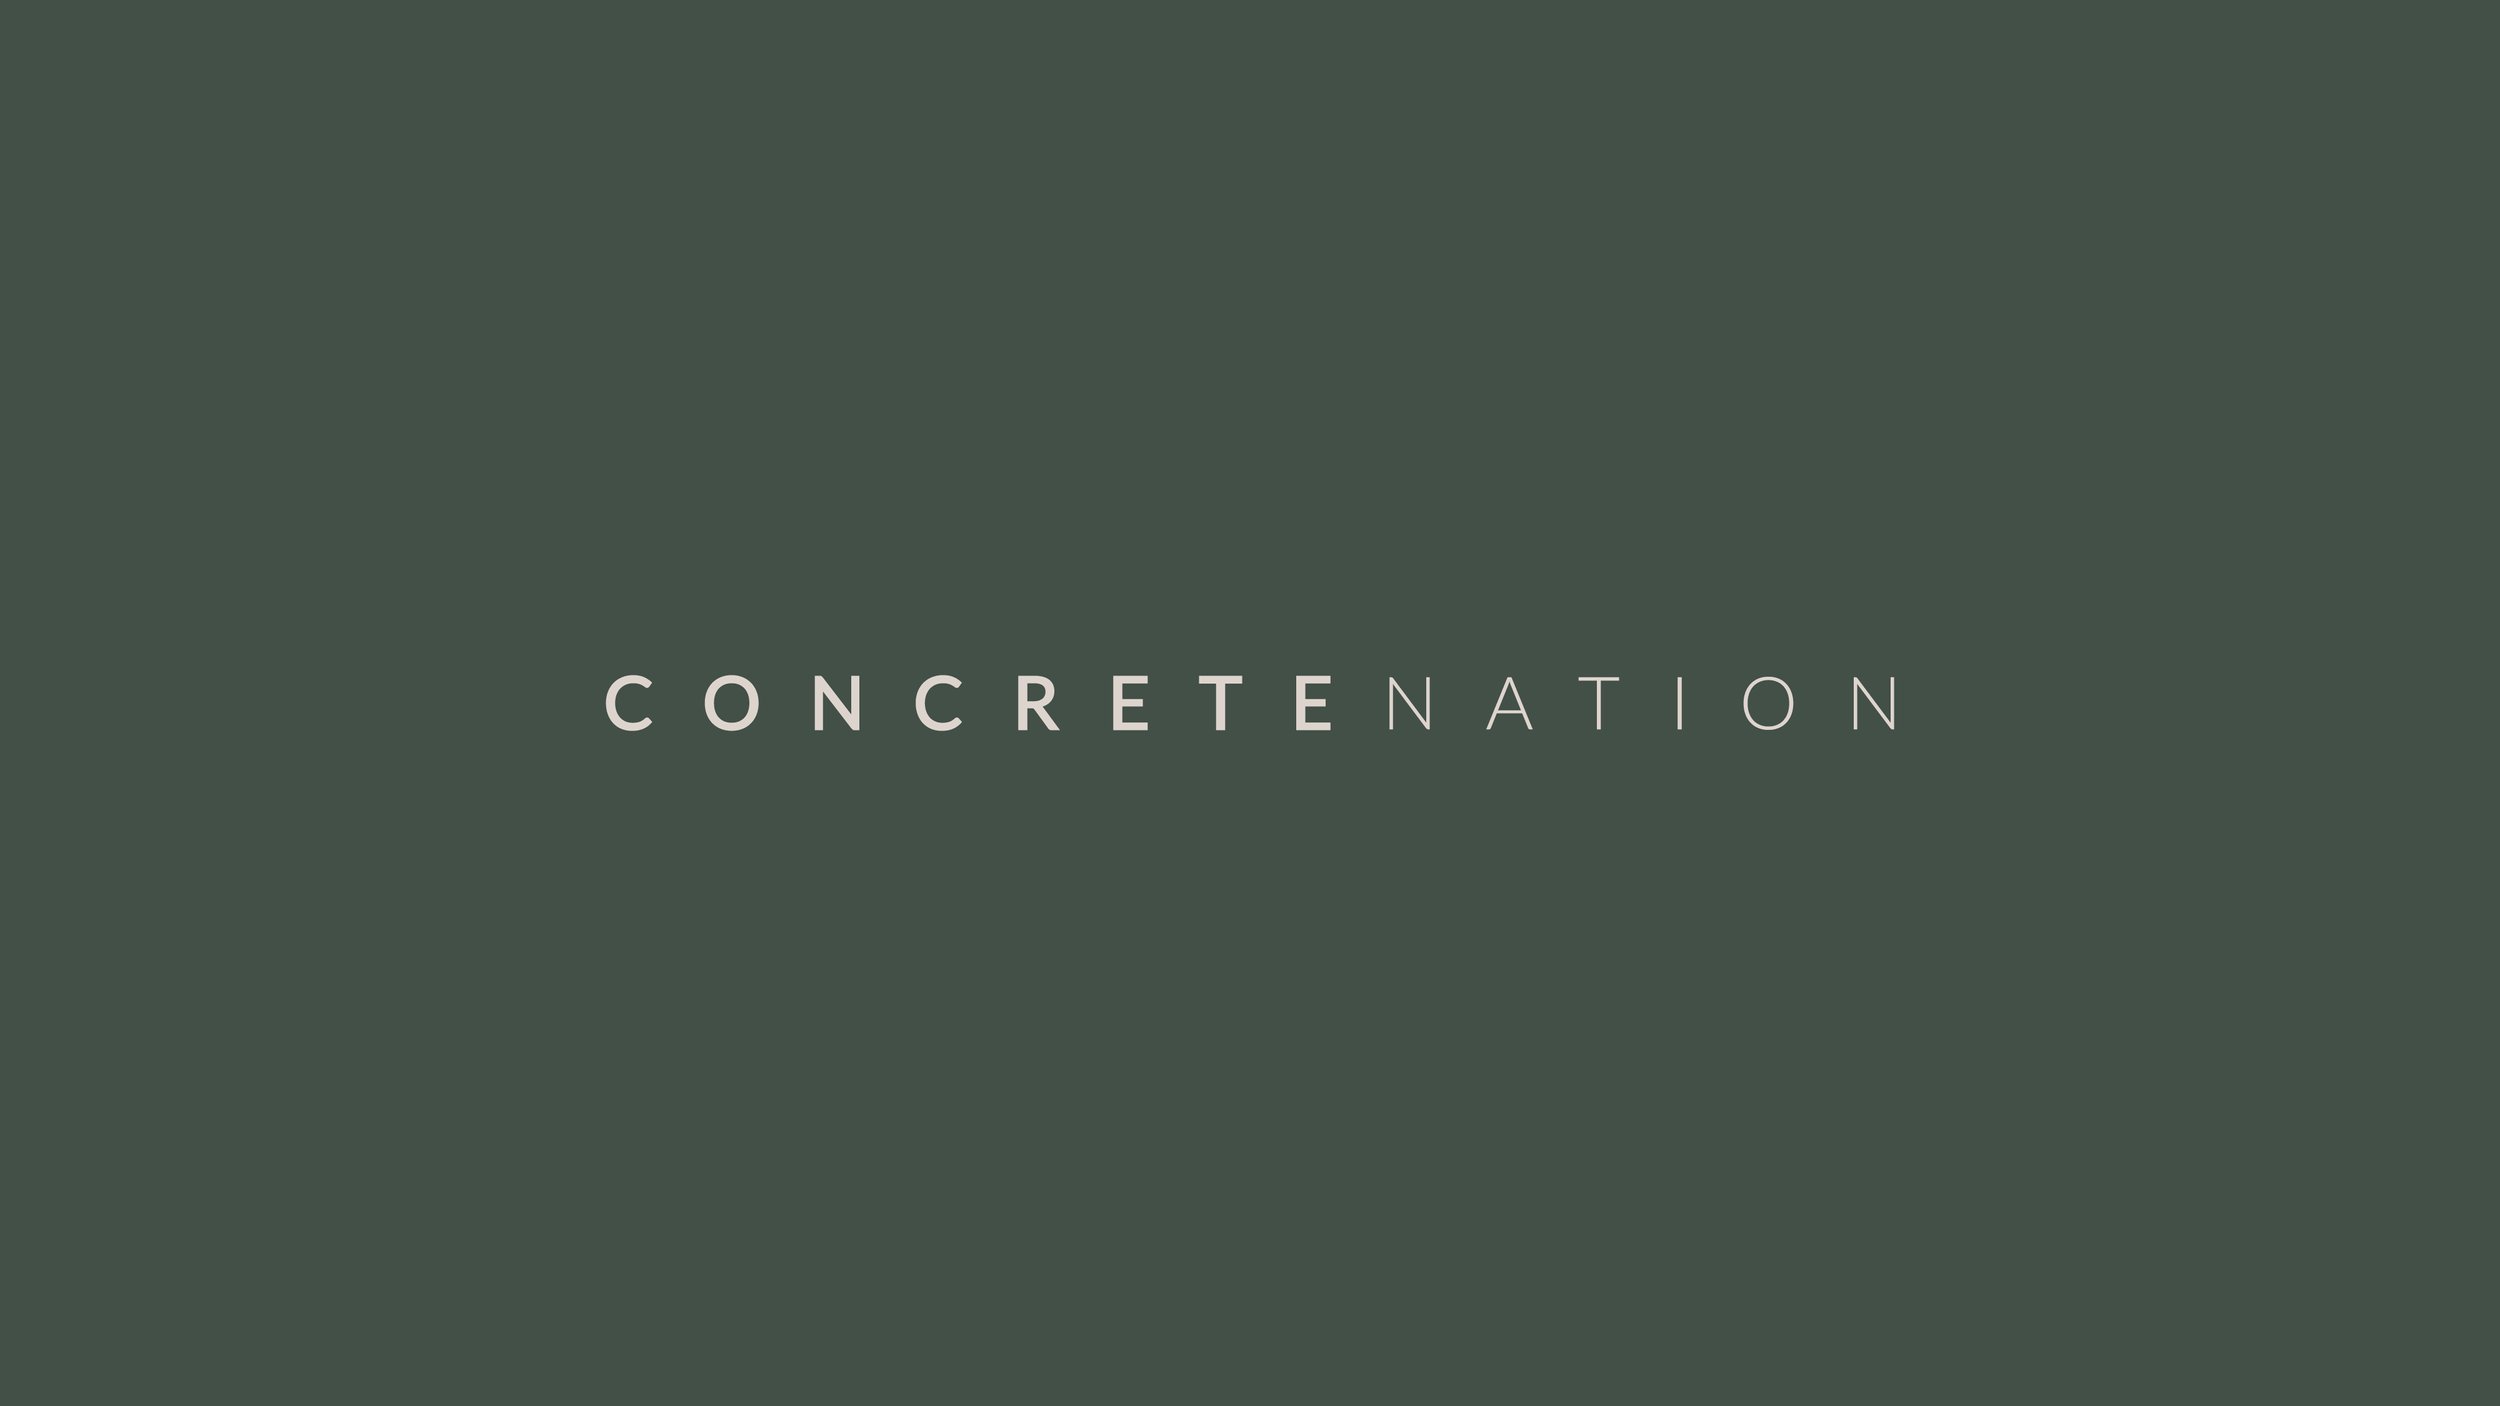 Concrete Nation_Showcase_v1.jpg